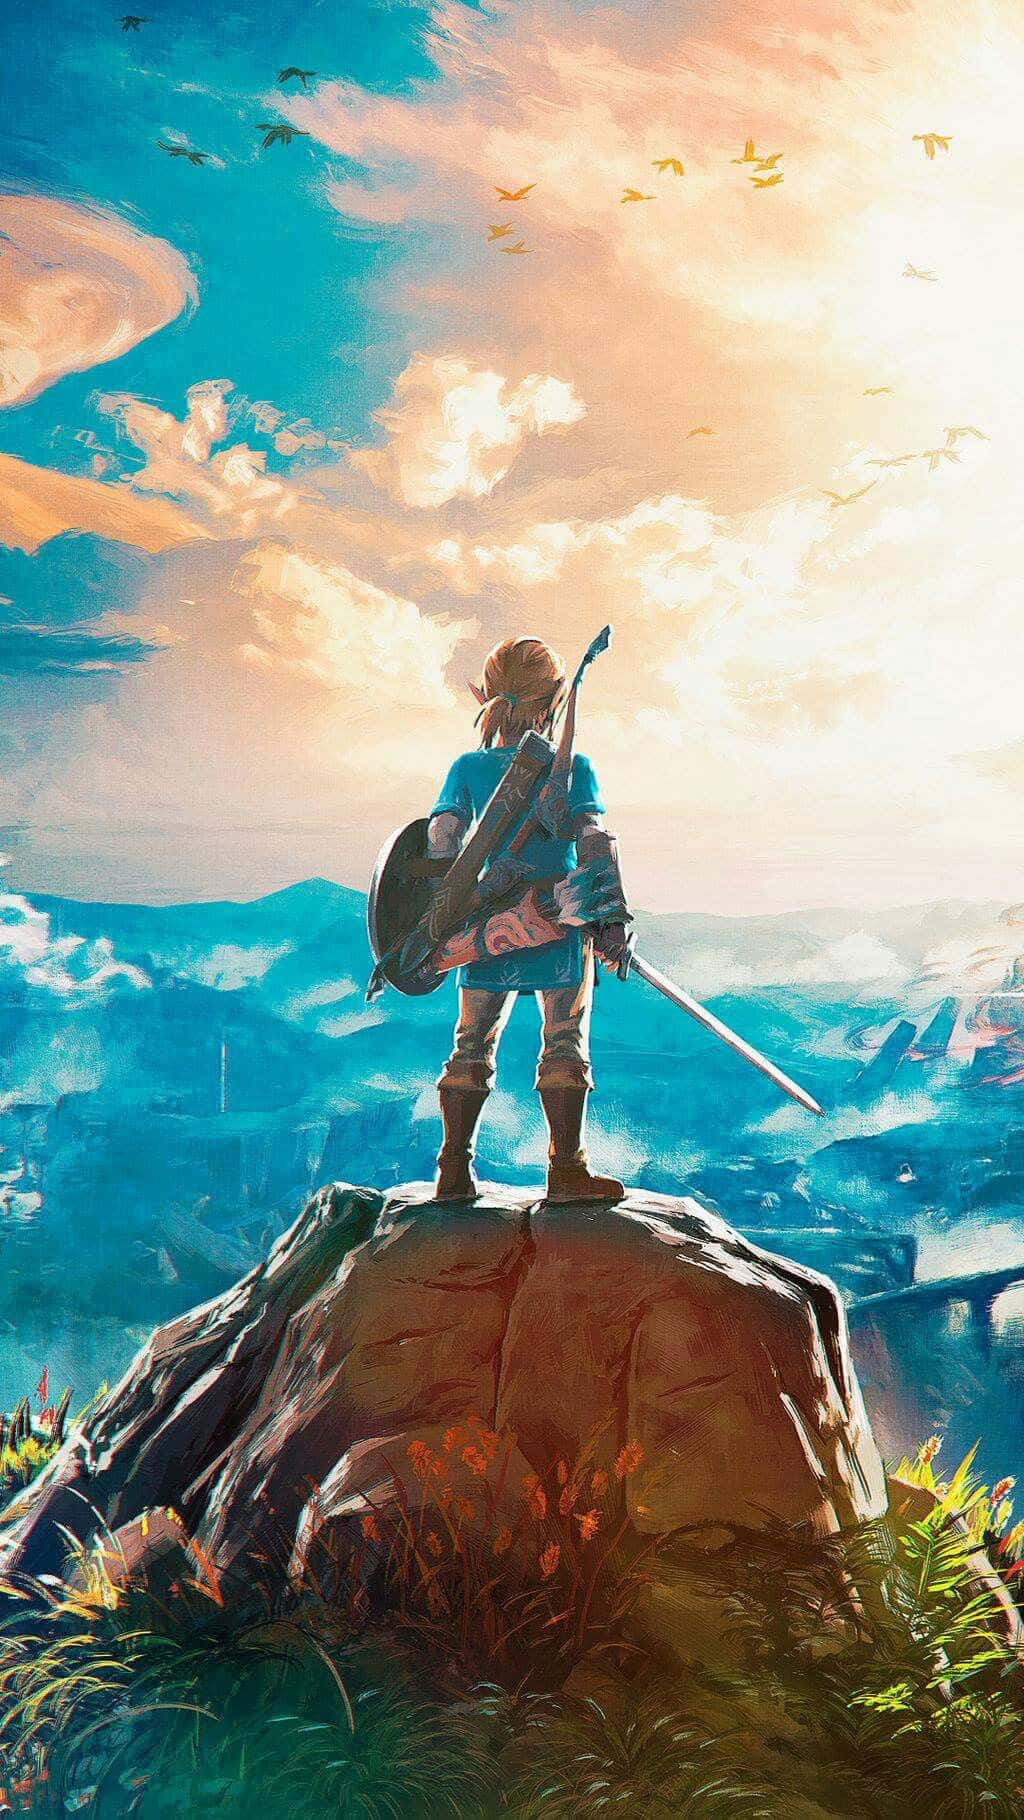 The Legend of Zelda: Breath of the Wild Scenic Landscape